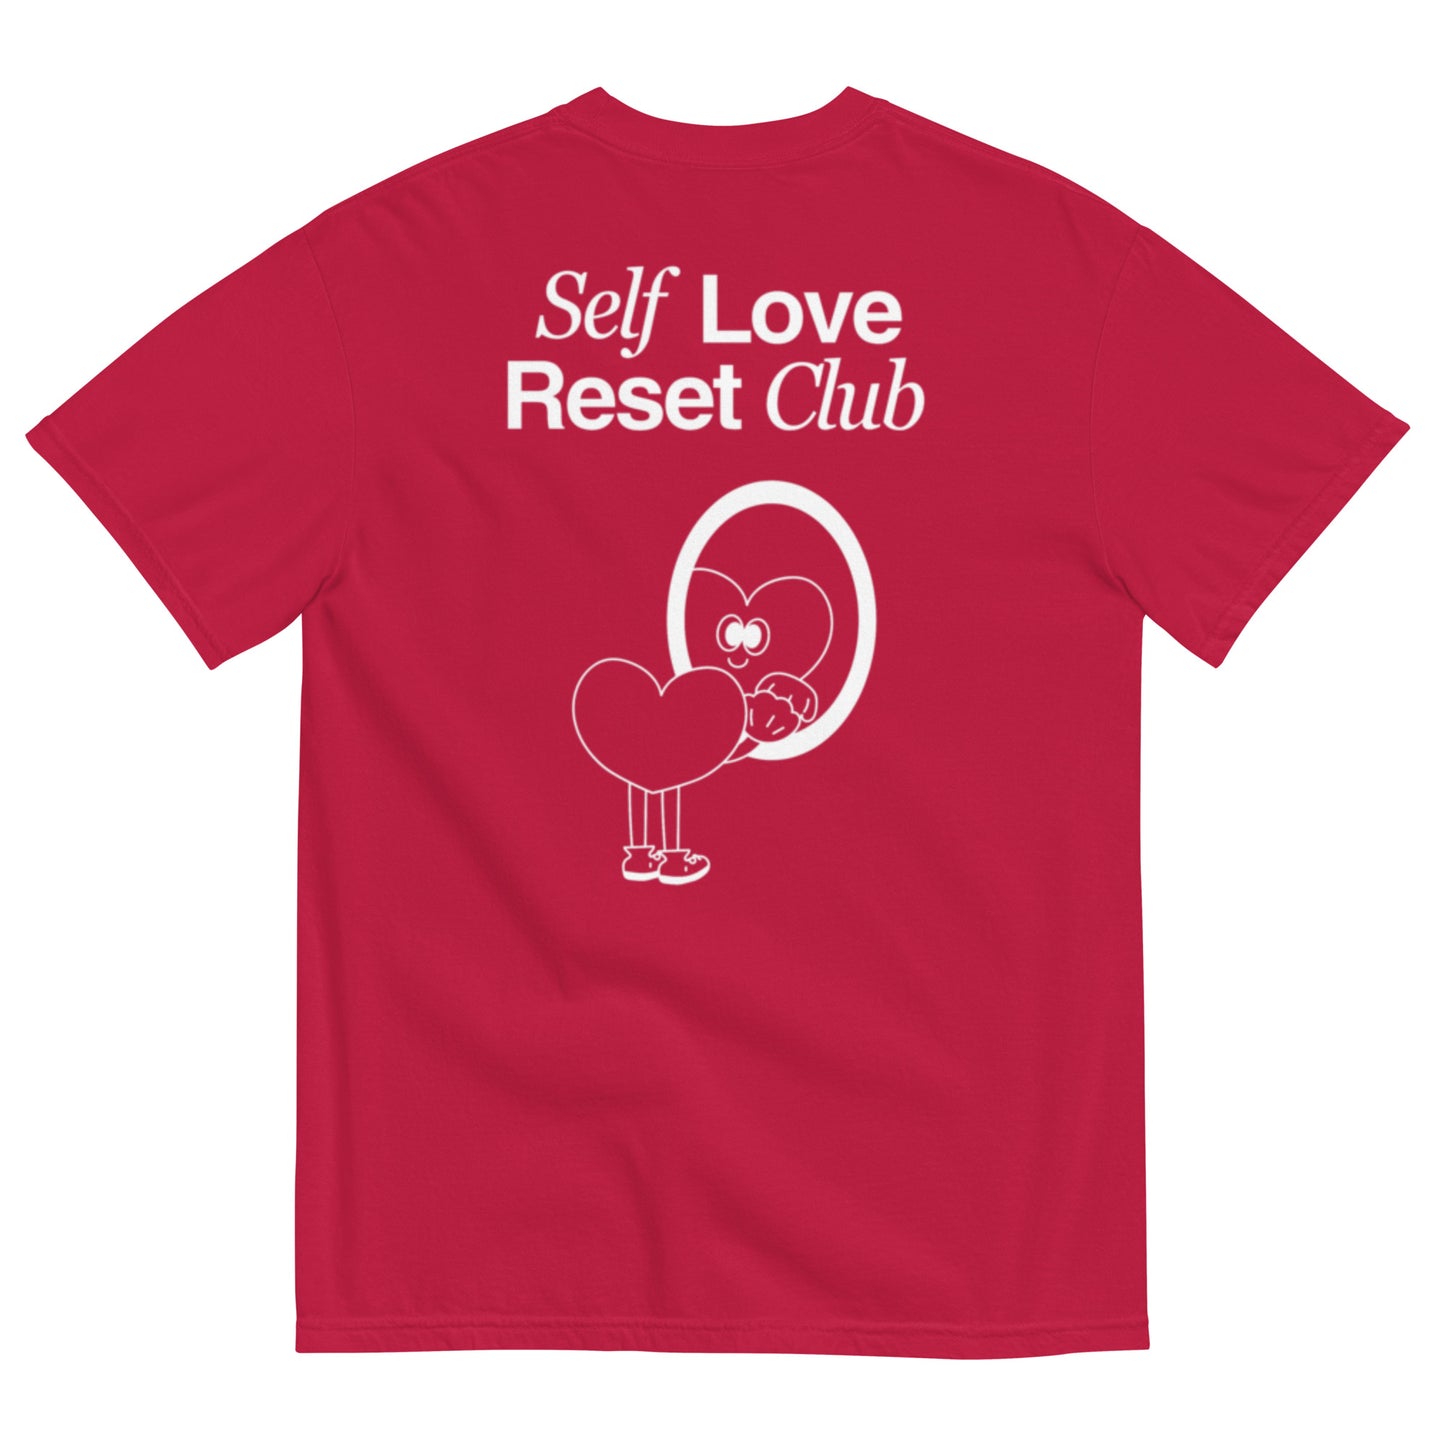 Self Love Reset Club